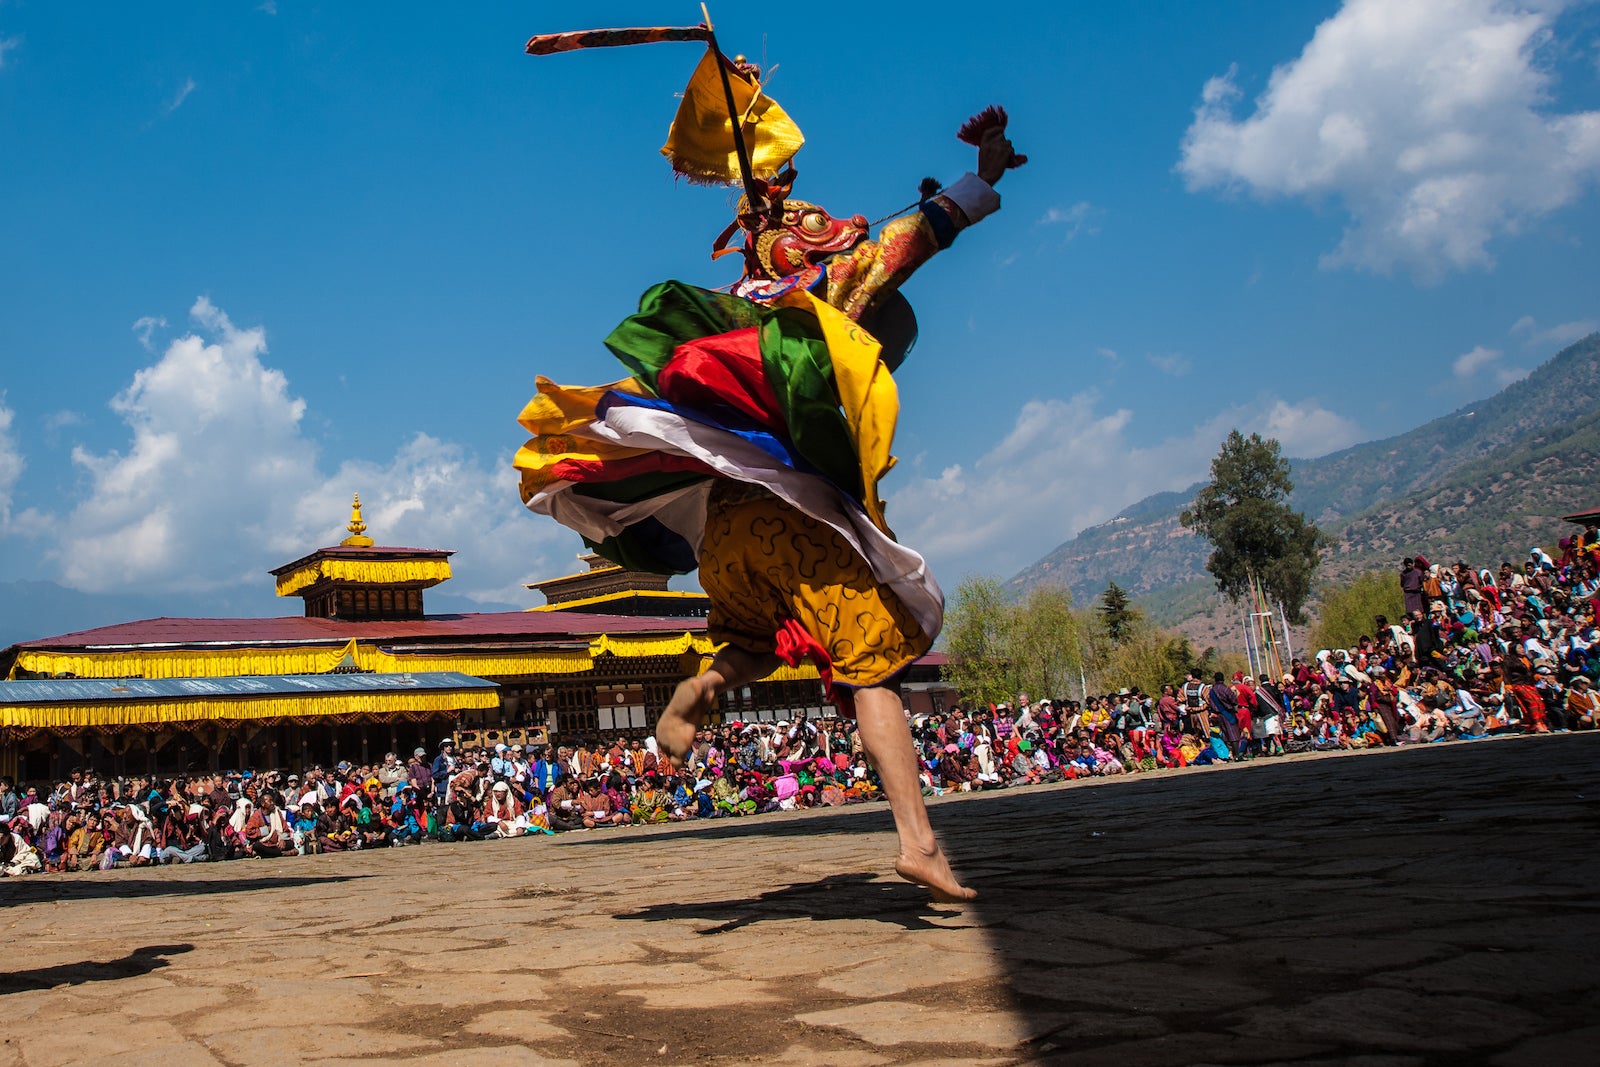 bhutan tourism review